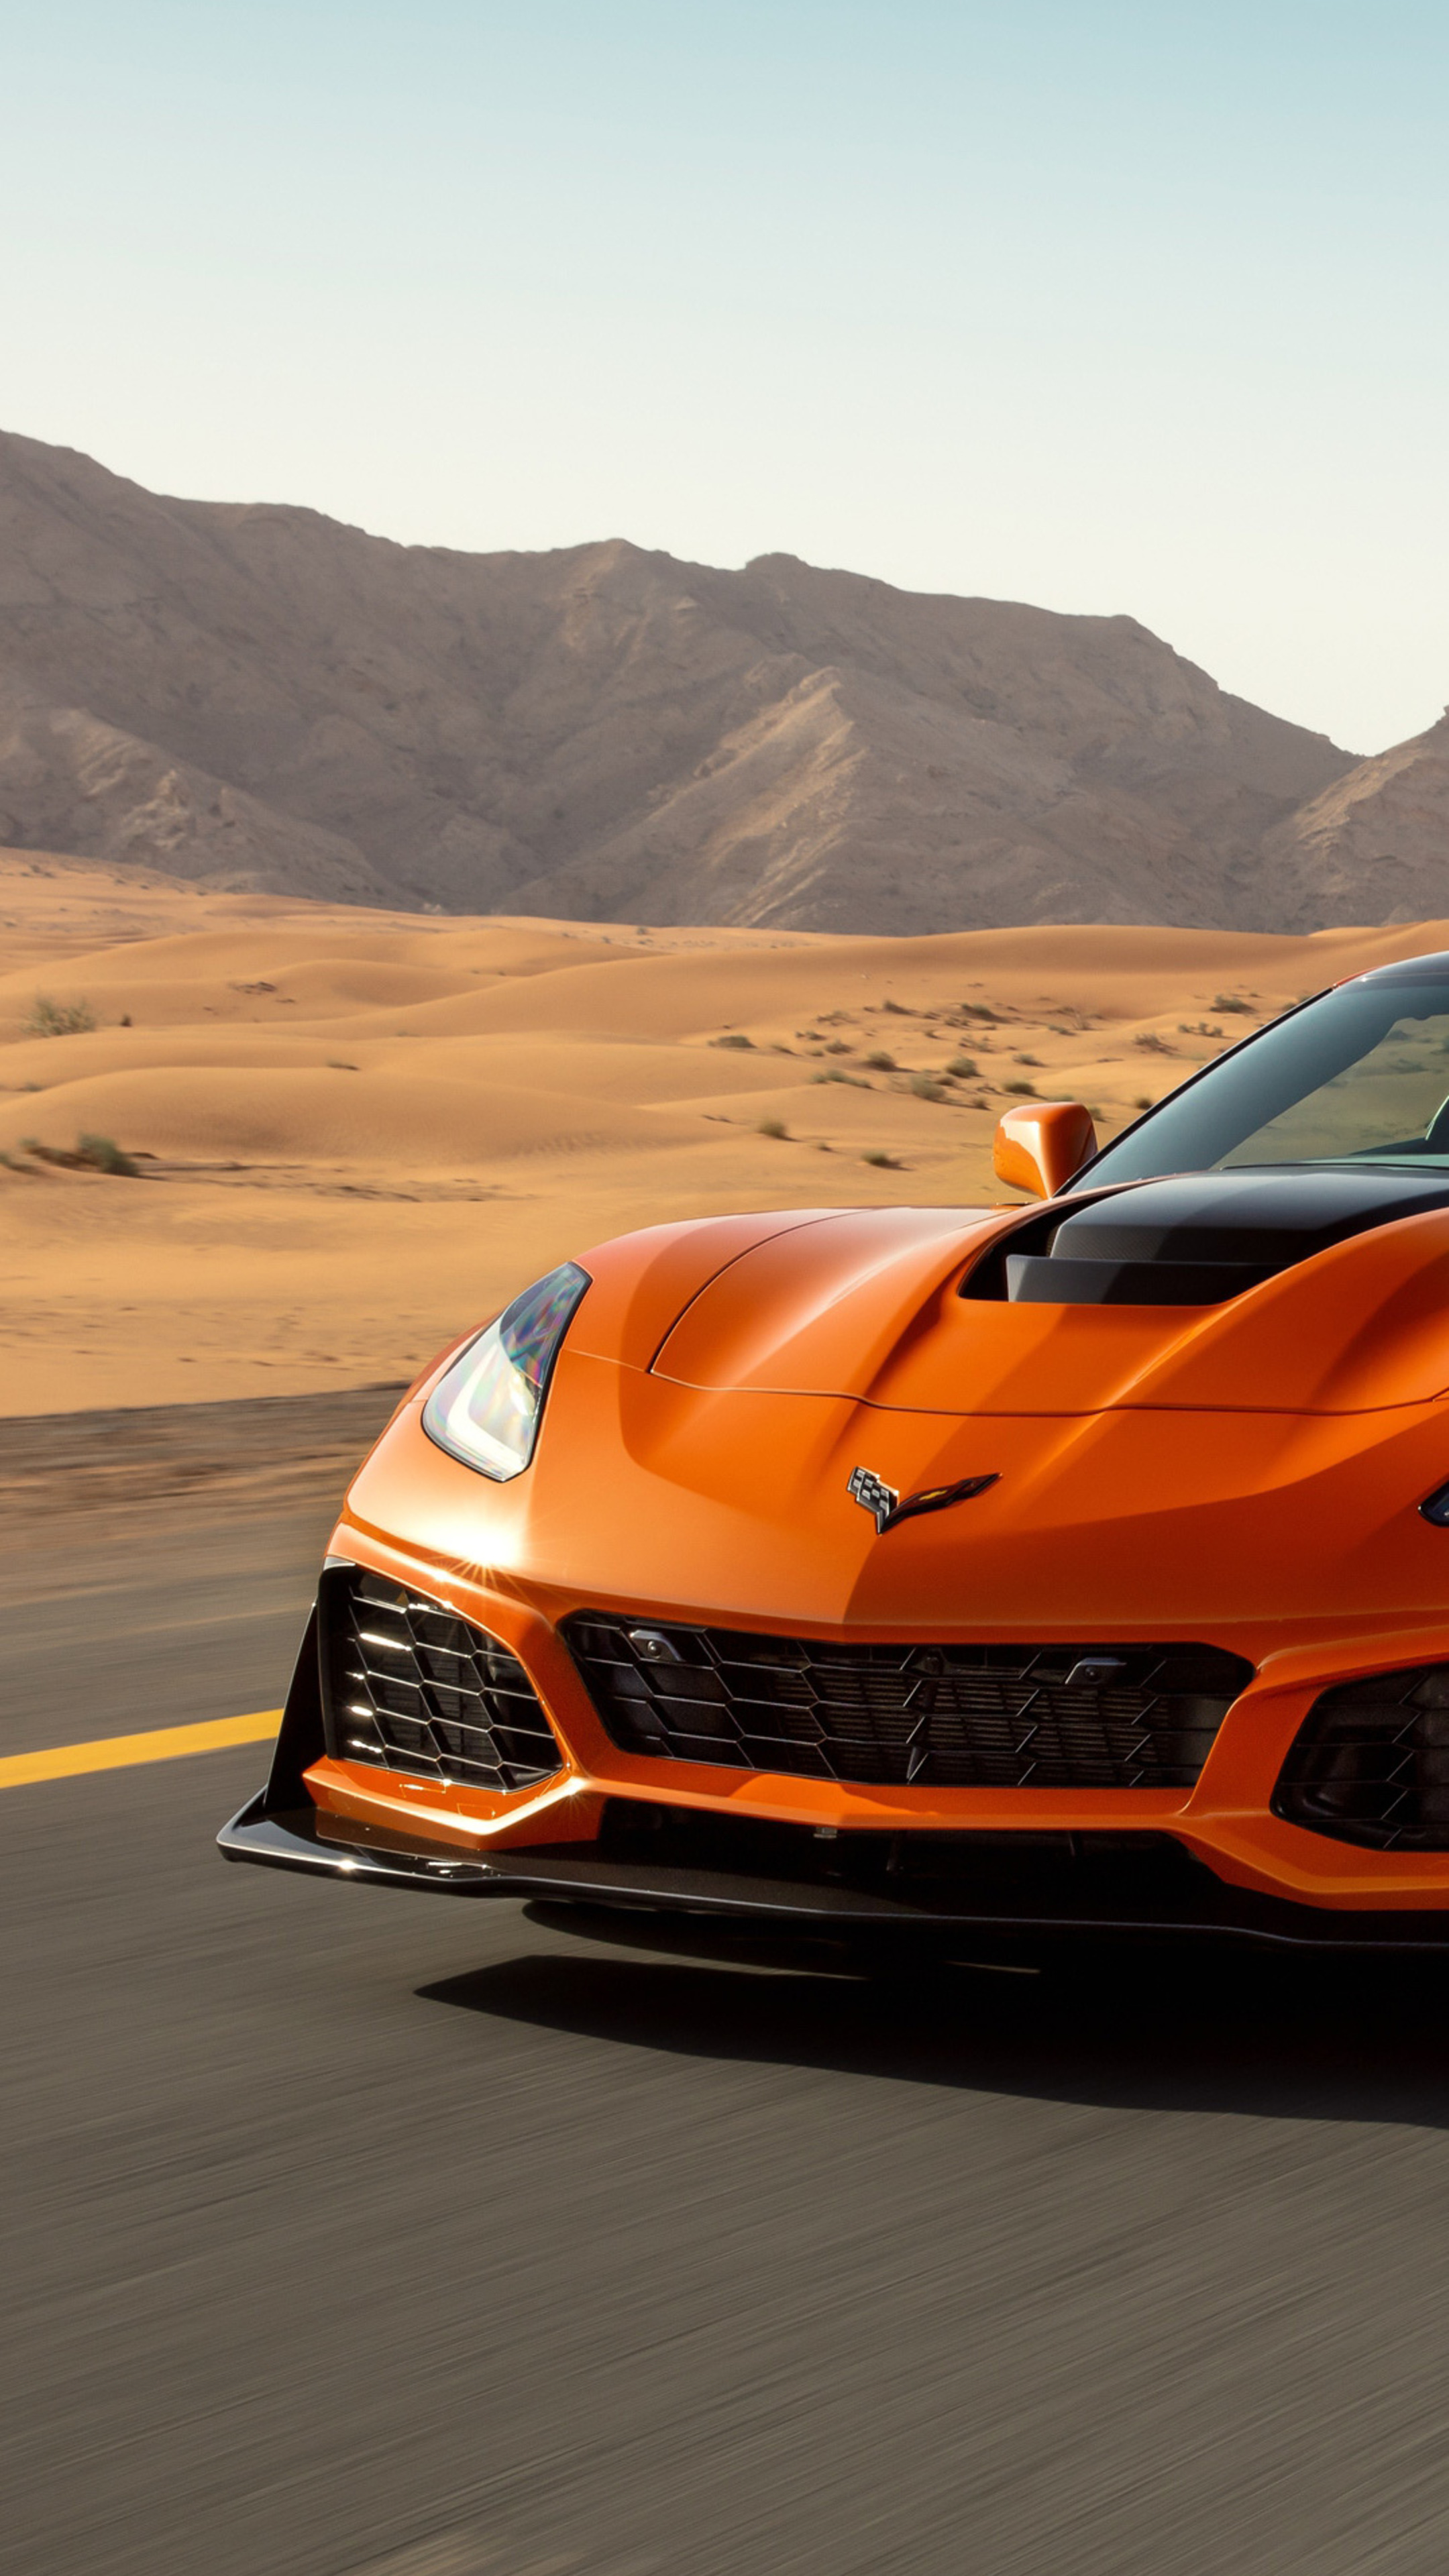 Corvette: Chevy ZR1 2019, Front splitter, Orange sports car, C7 generation model. 2160x3840 4K Wallpaper.